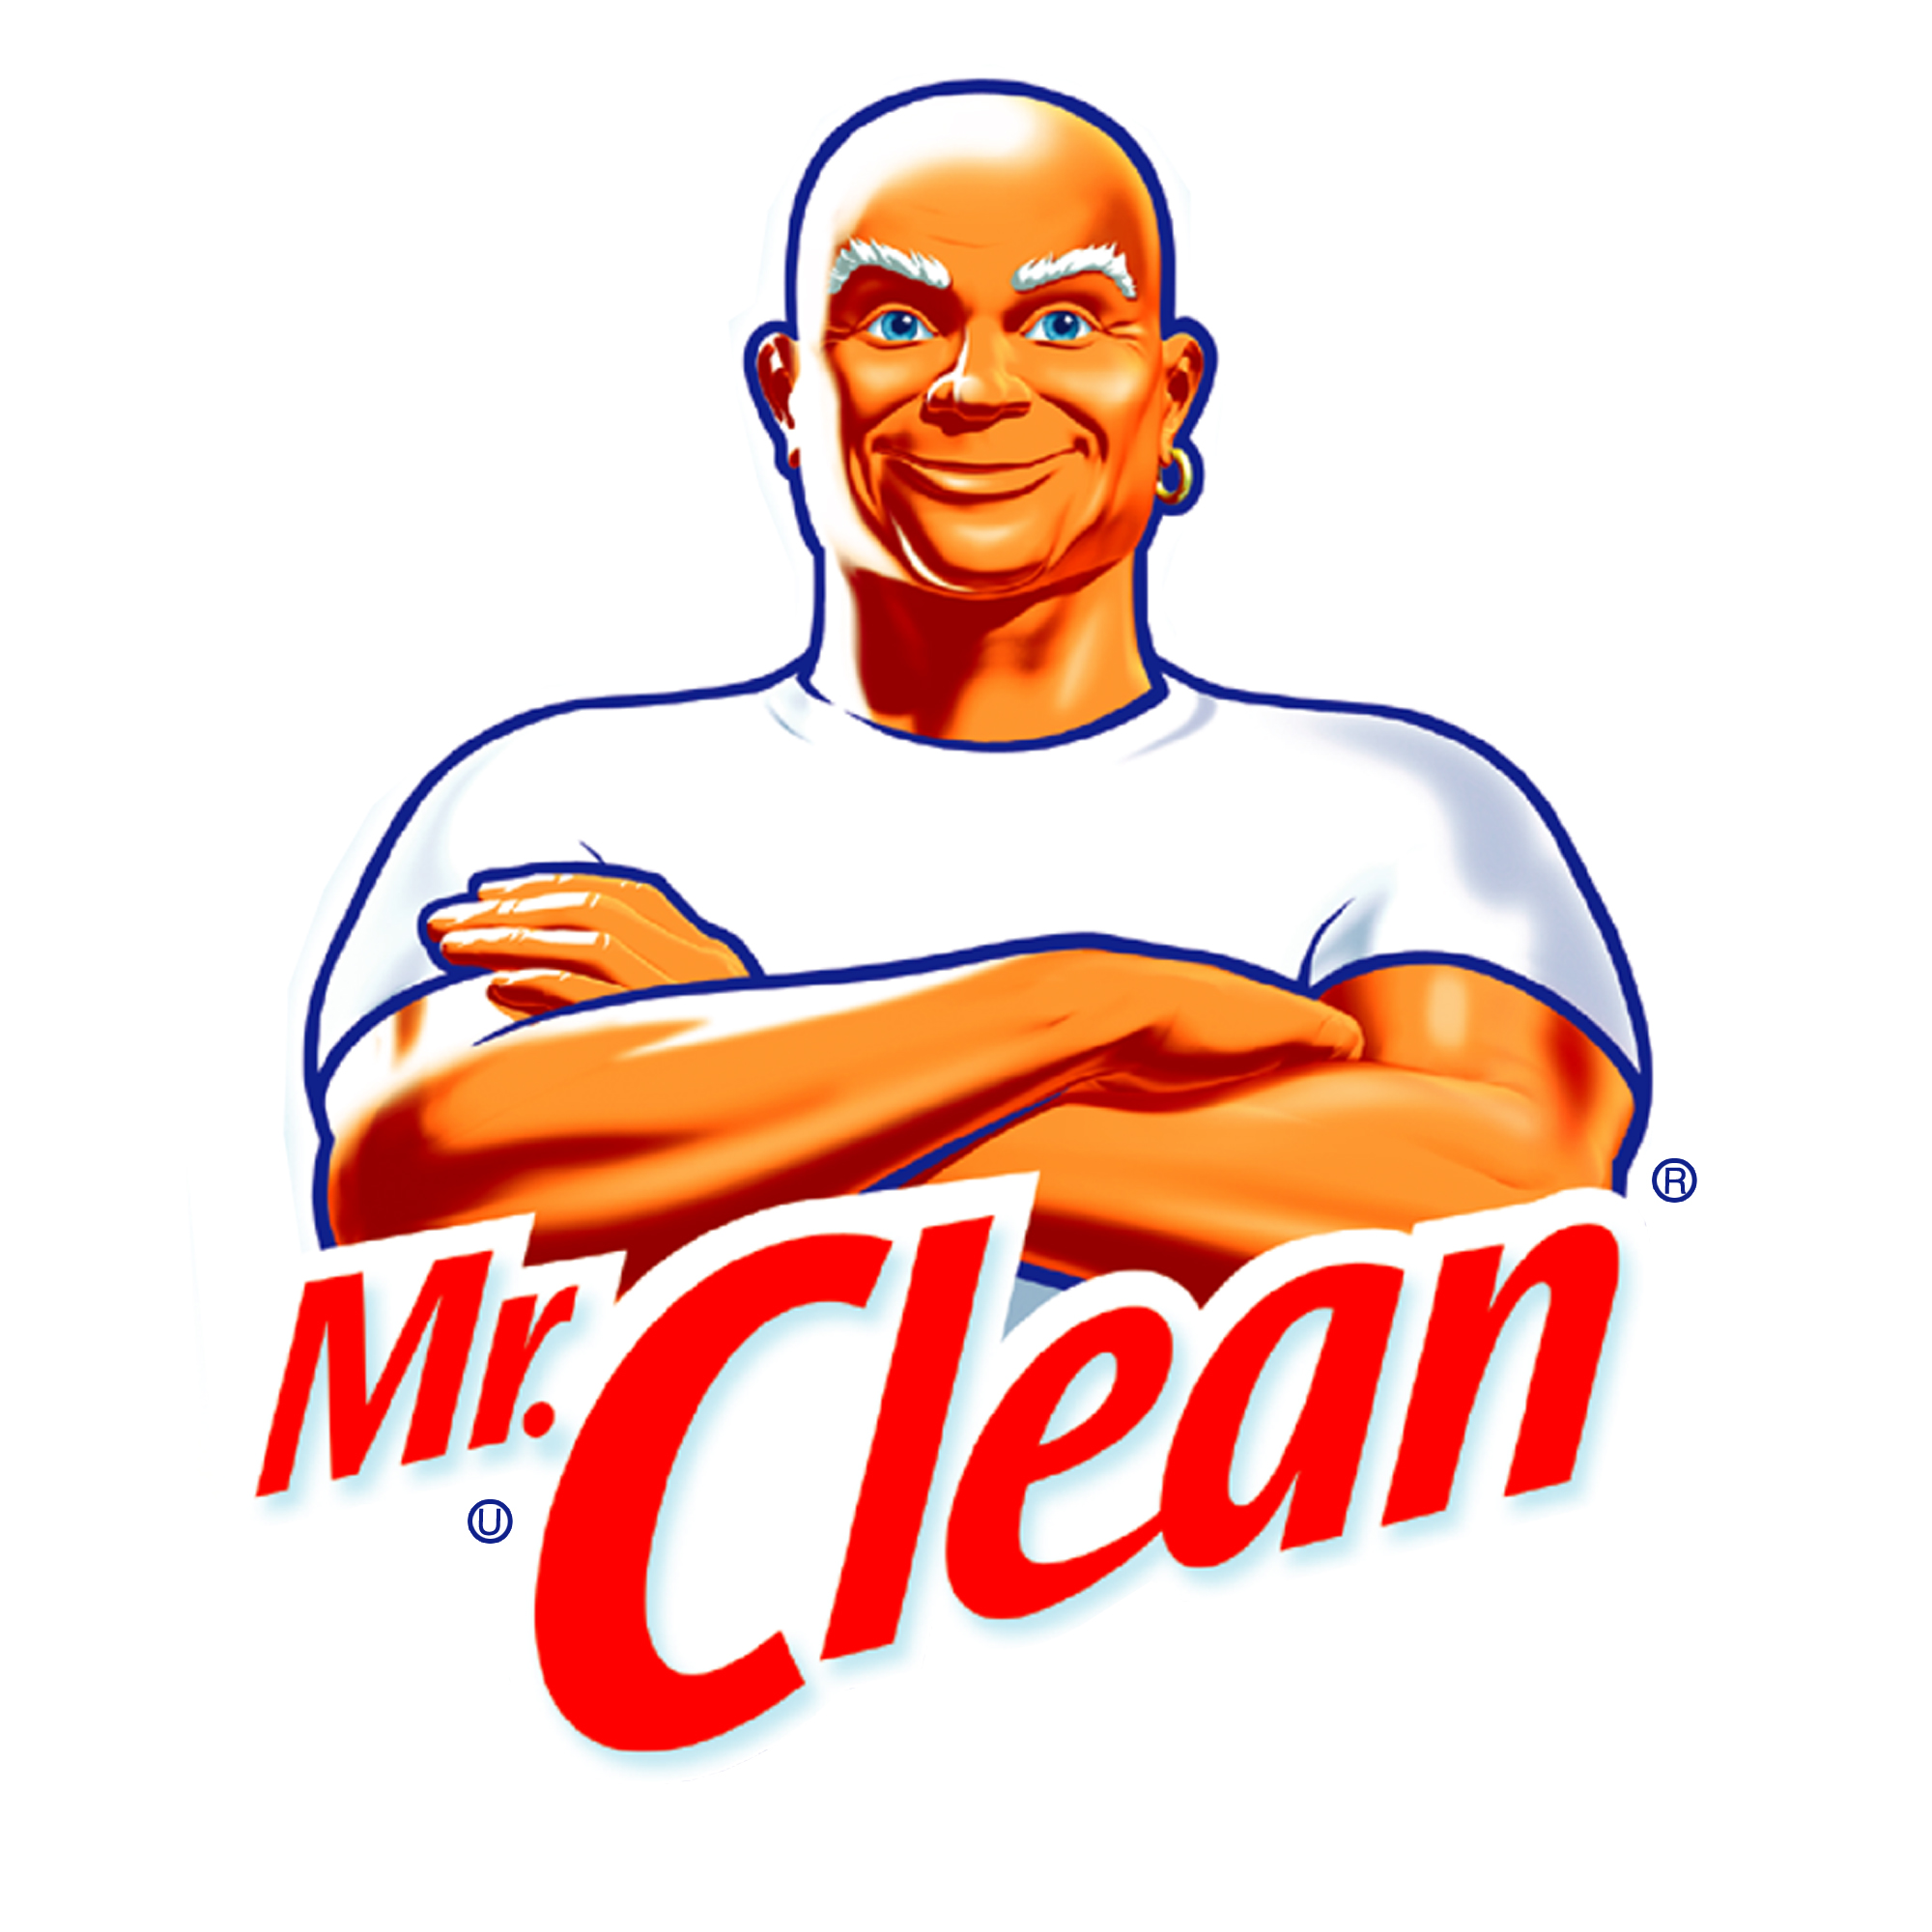 Mr Clean Clip Art - ClipArt Best